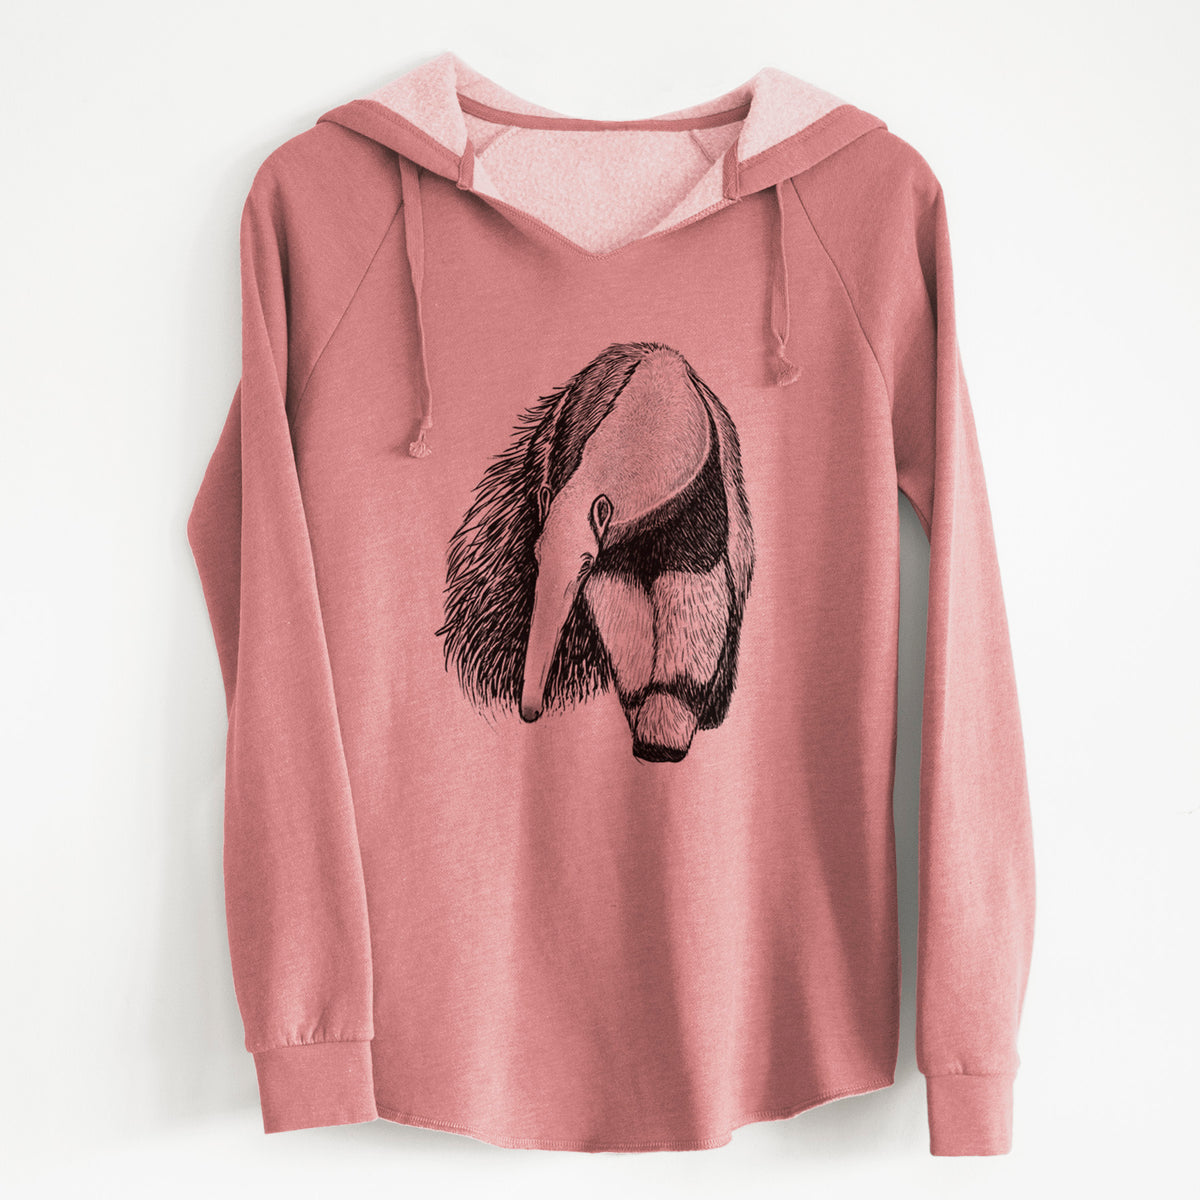 Giant Anteater - Myrmecophaga tridactyla - Cali Wave Hooded Sweatshirt